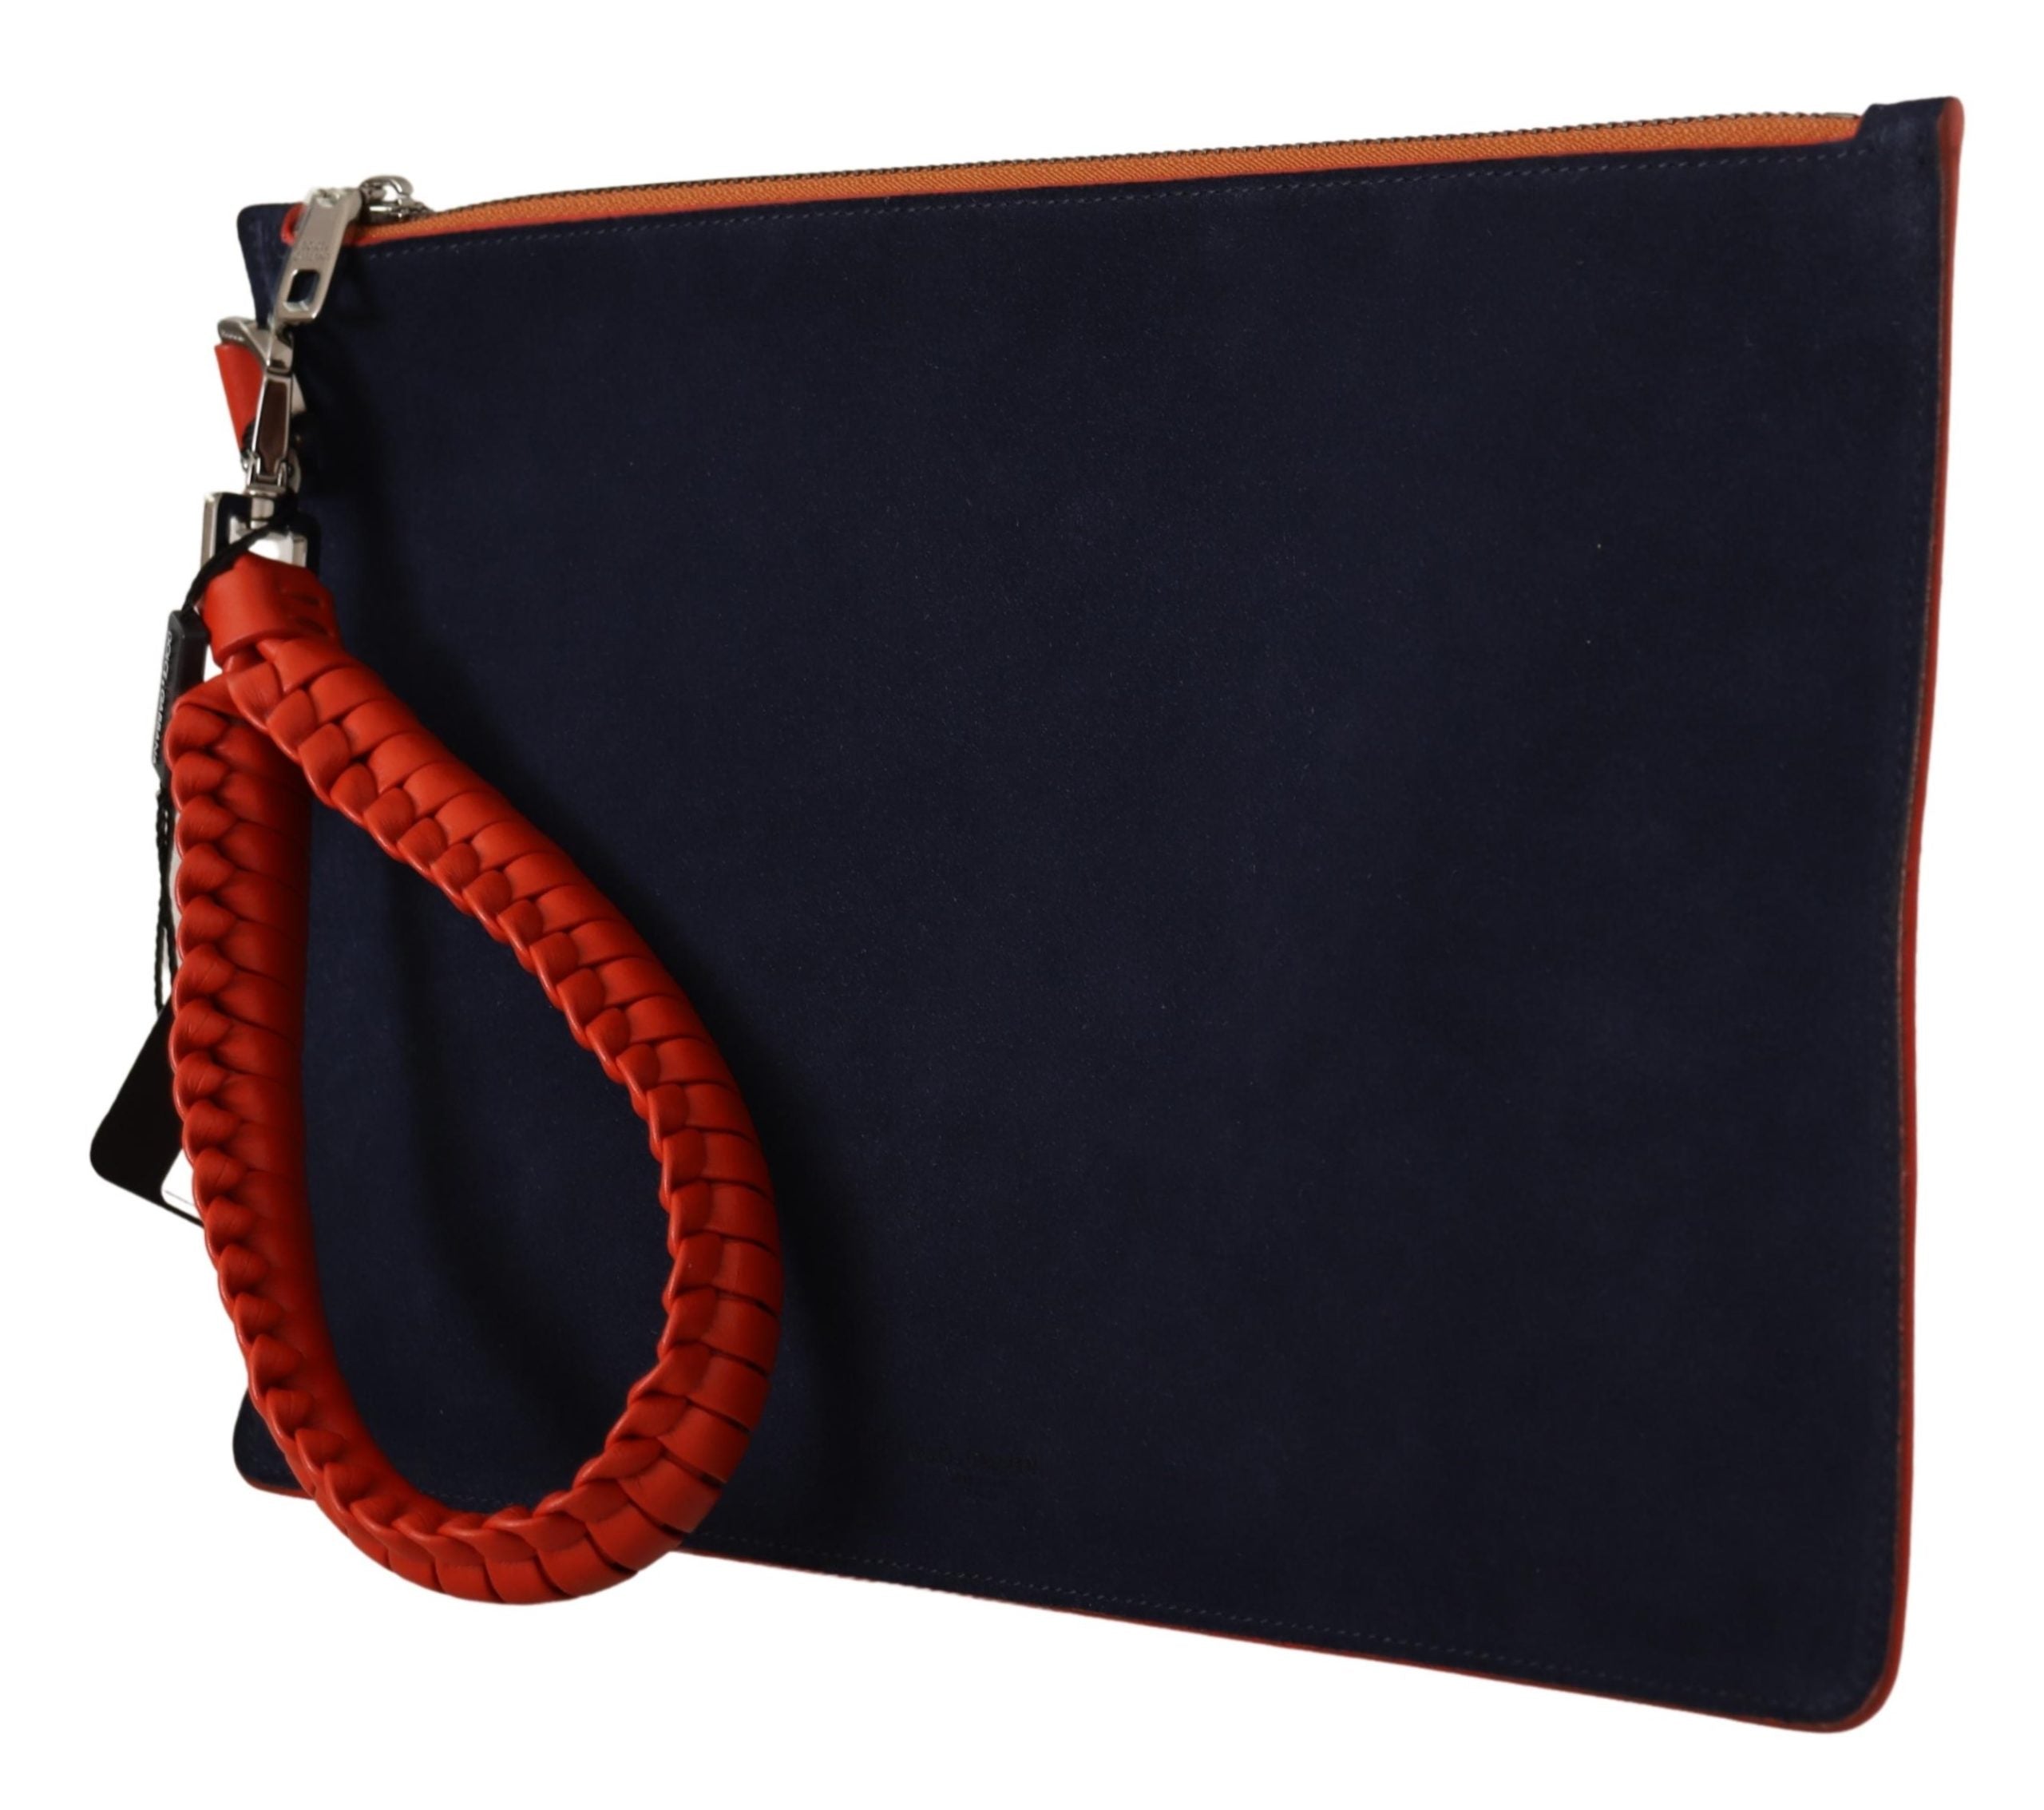 Orange Calf Leather Flat Pouch Wrist Strap Indigo Bag